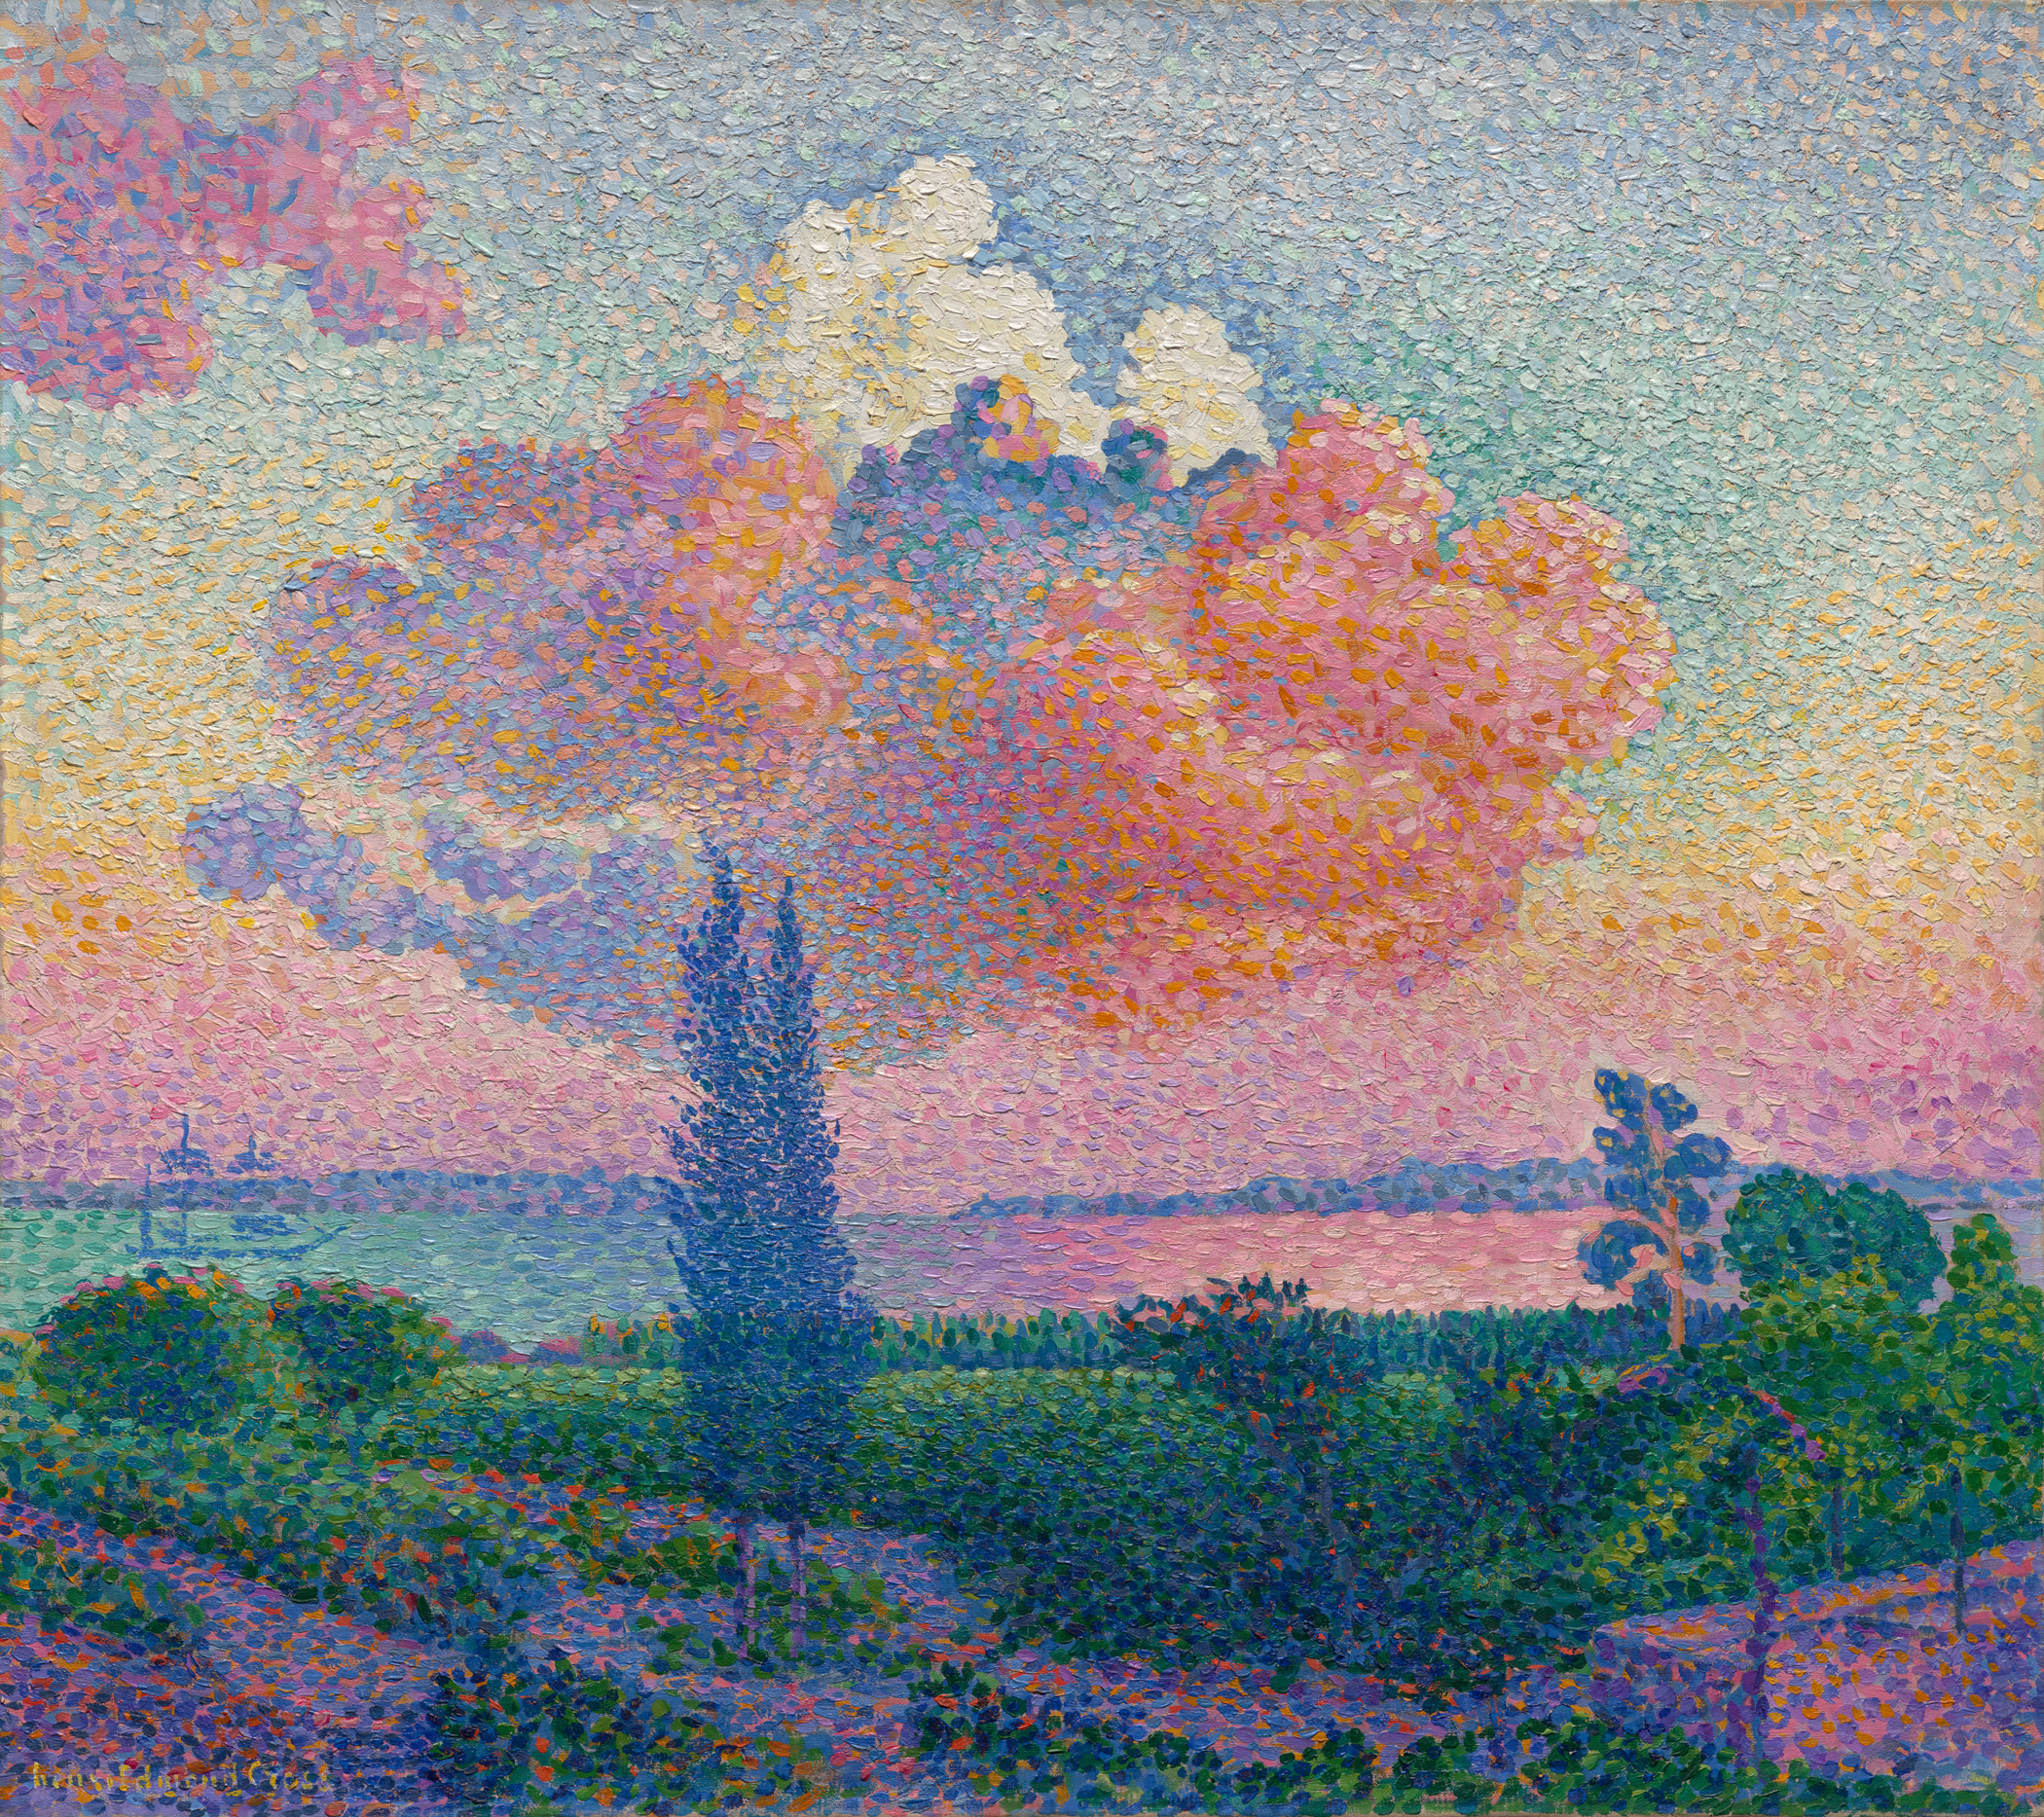 Henri-Edmond Cross (French, 1856–1910). "The Pink Cloud"